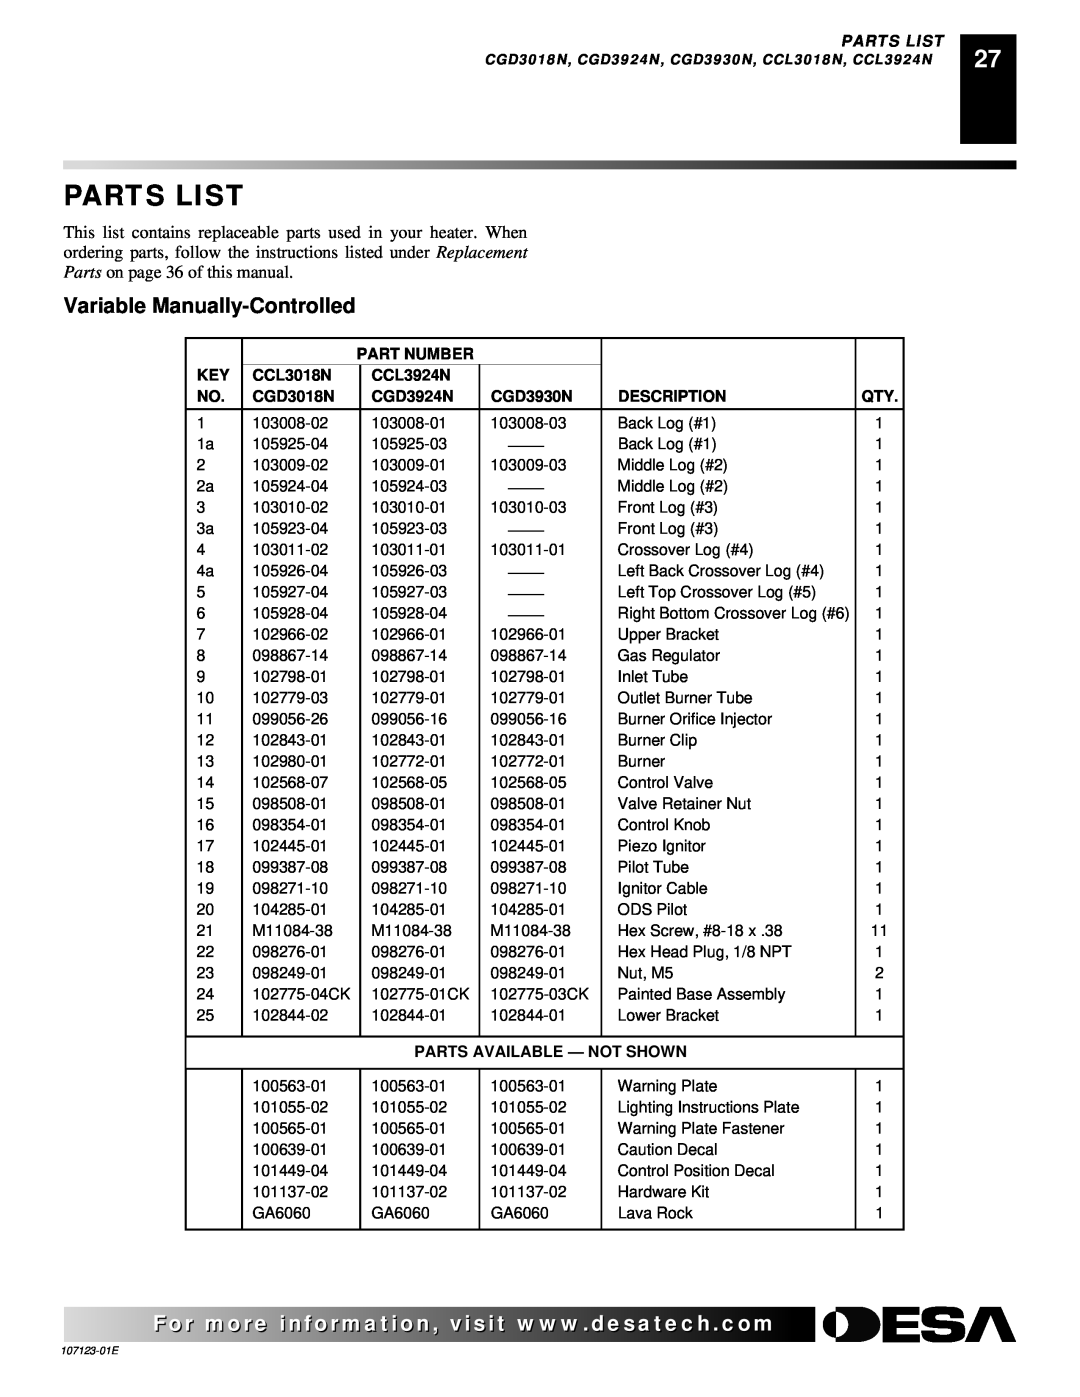 Desa CCL3924N Parts List, Variable Manually-Controlled, Part Number, CCL3018N, CGD3018N, CGD3924N, CGD3930N, Description 